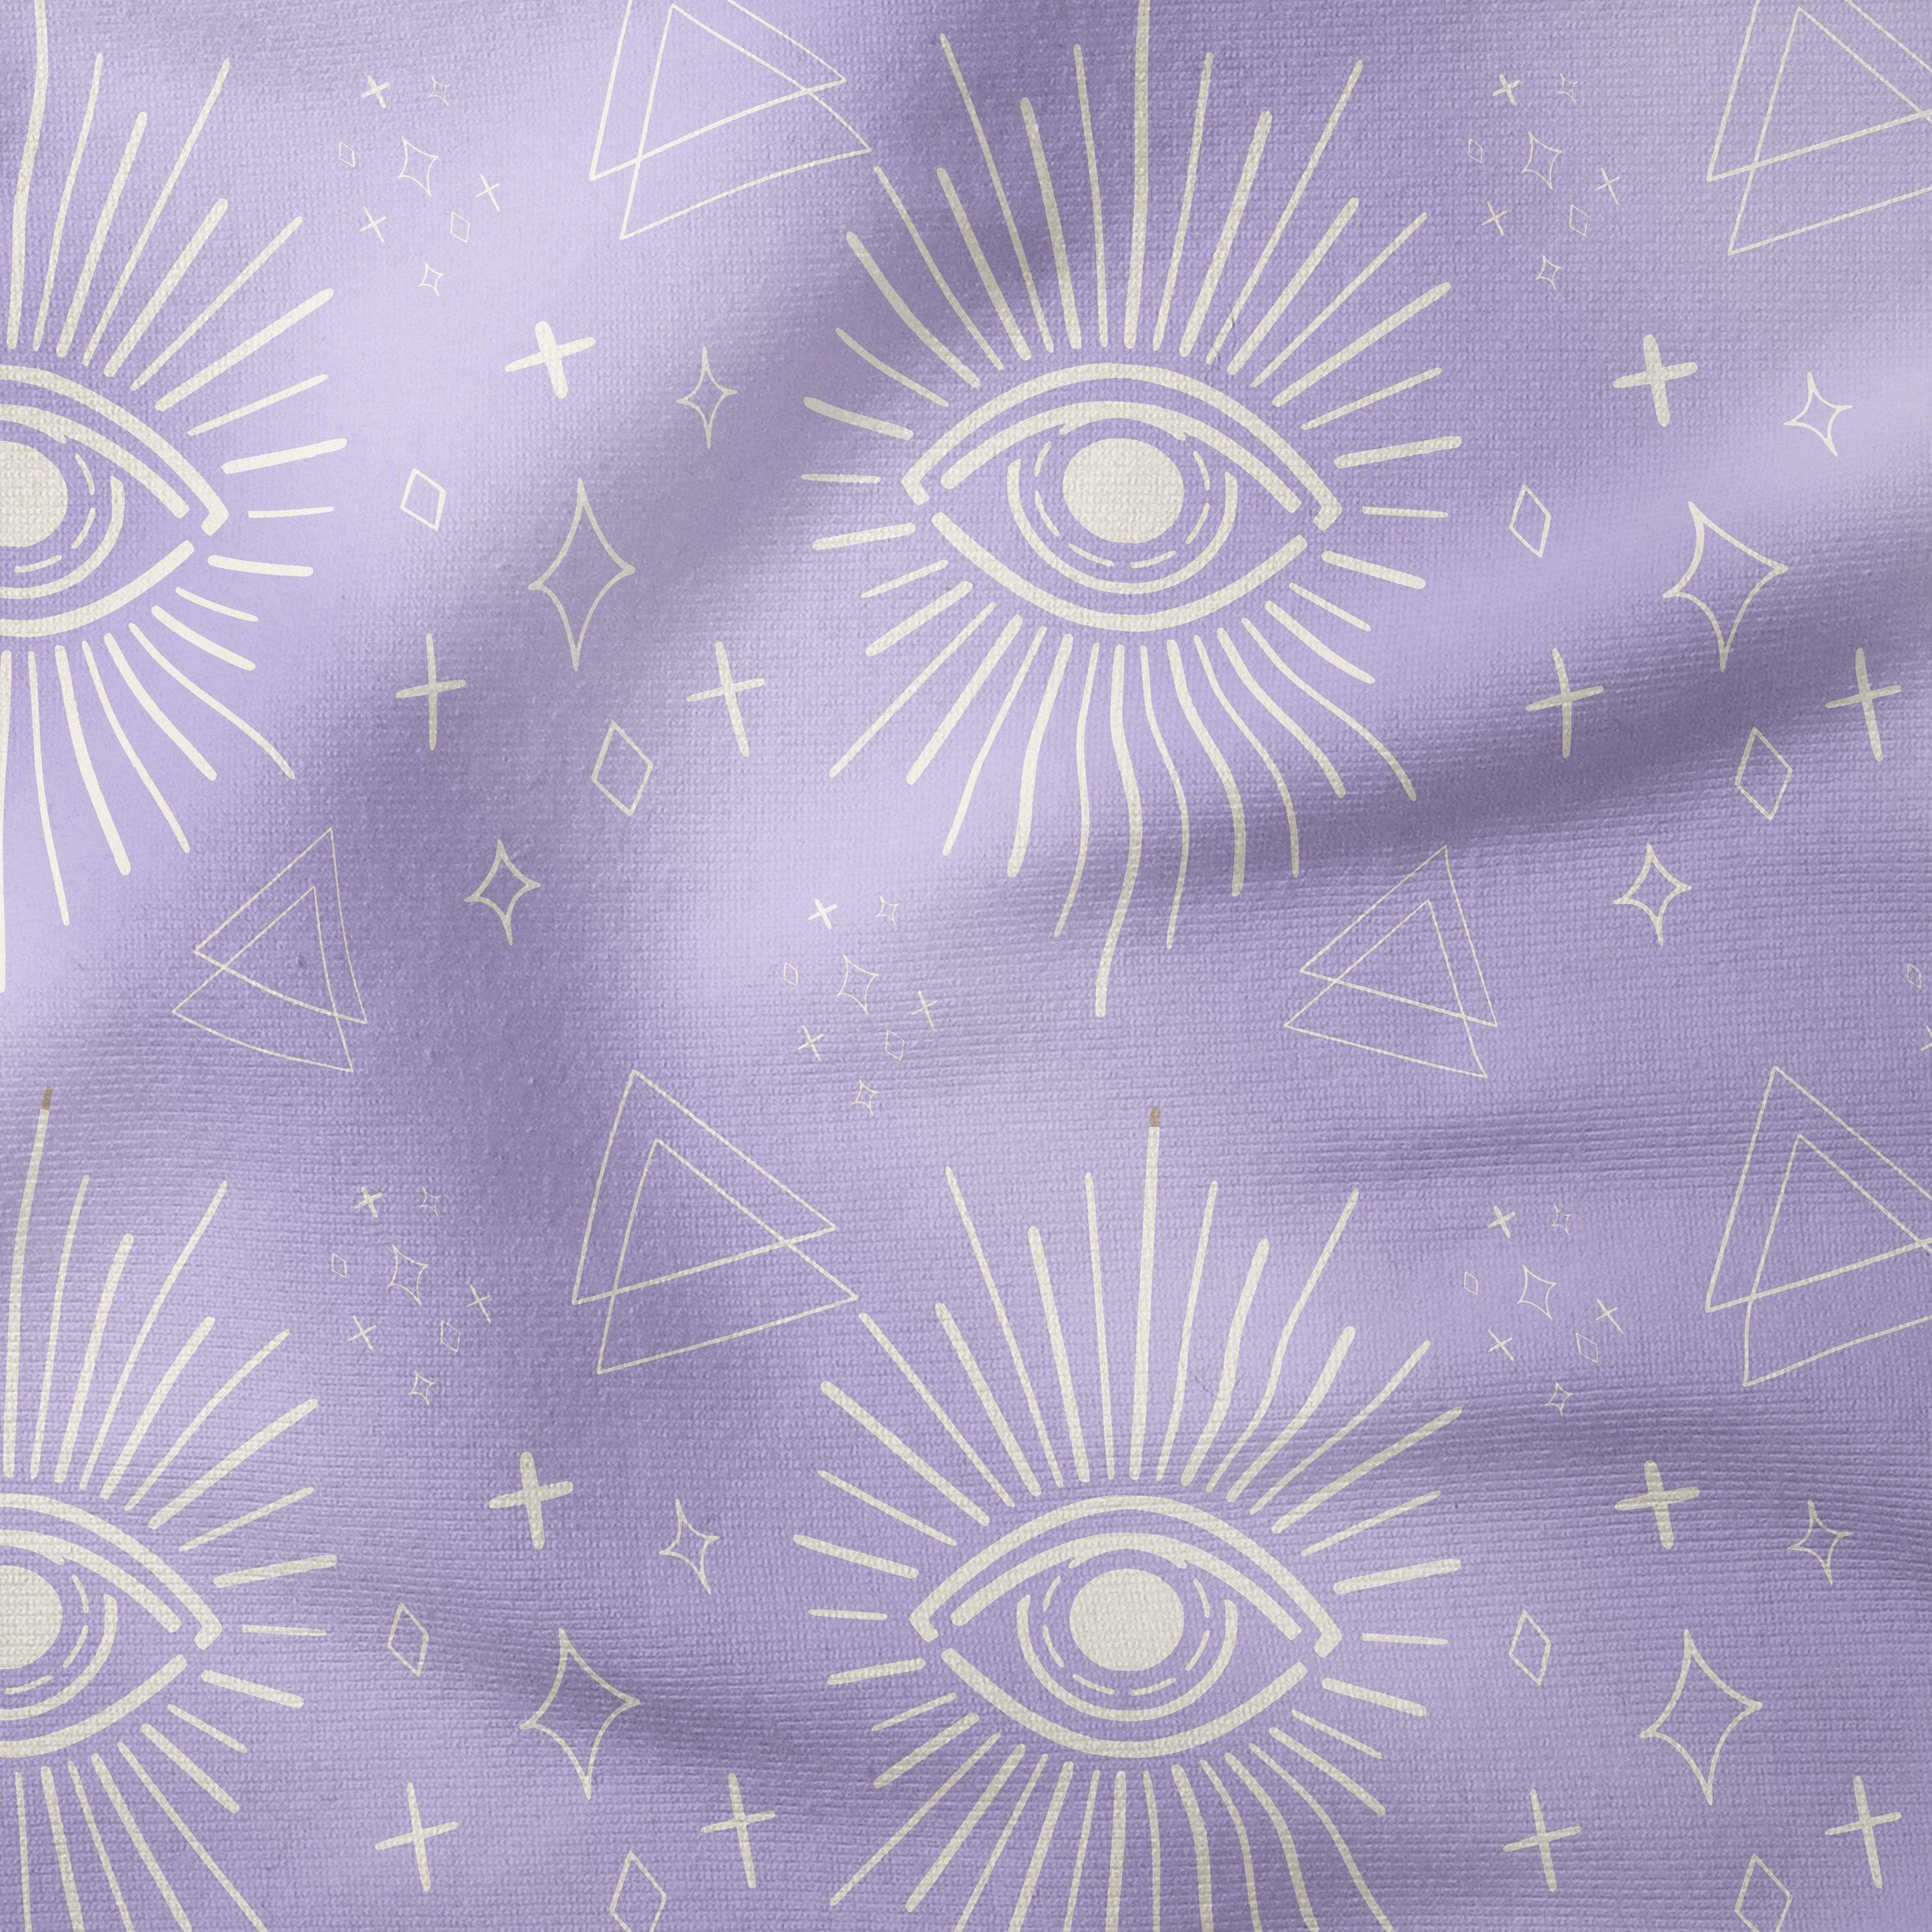 Mystic Eyes-Art Print Fabric-Melco Fabrics-Tofu on Lavender-Cotton Poplin (110gsm)-Melco Fabrics-Online-Fabric-Shop-Australia